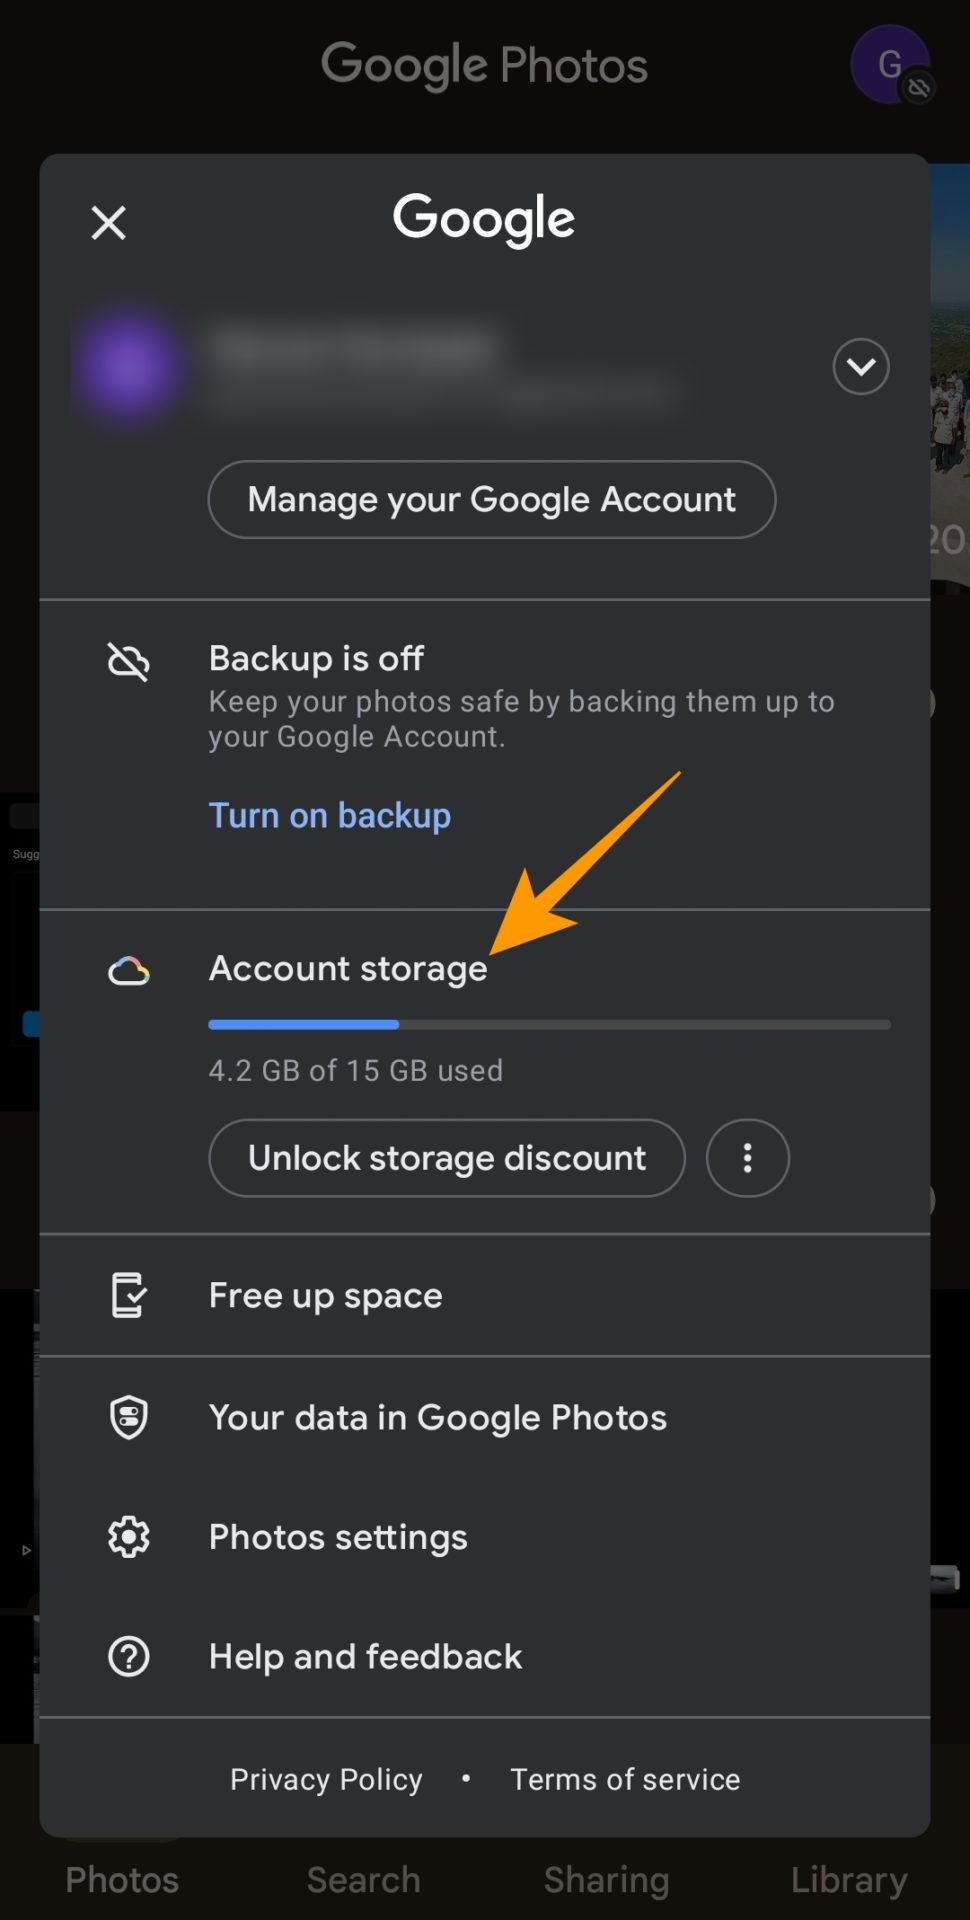 Account storage option on Google Photos